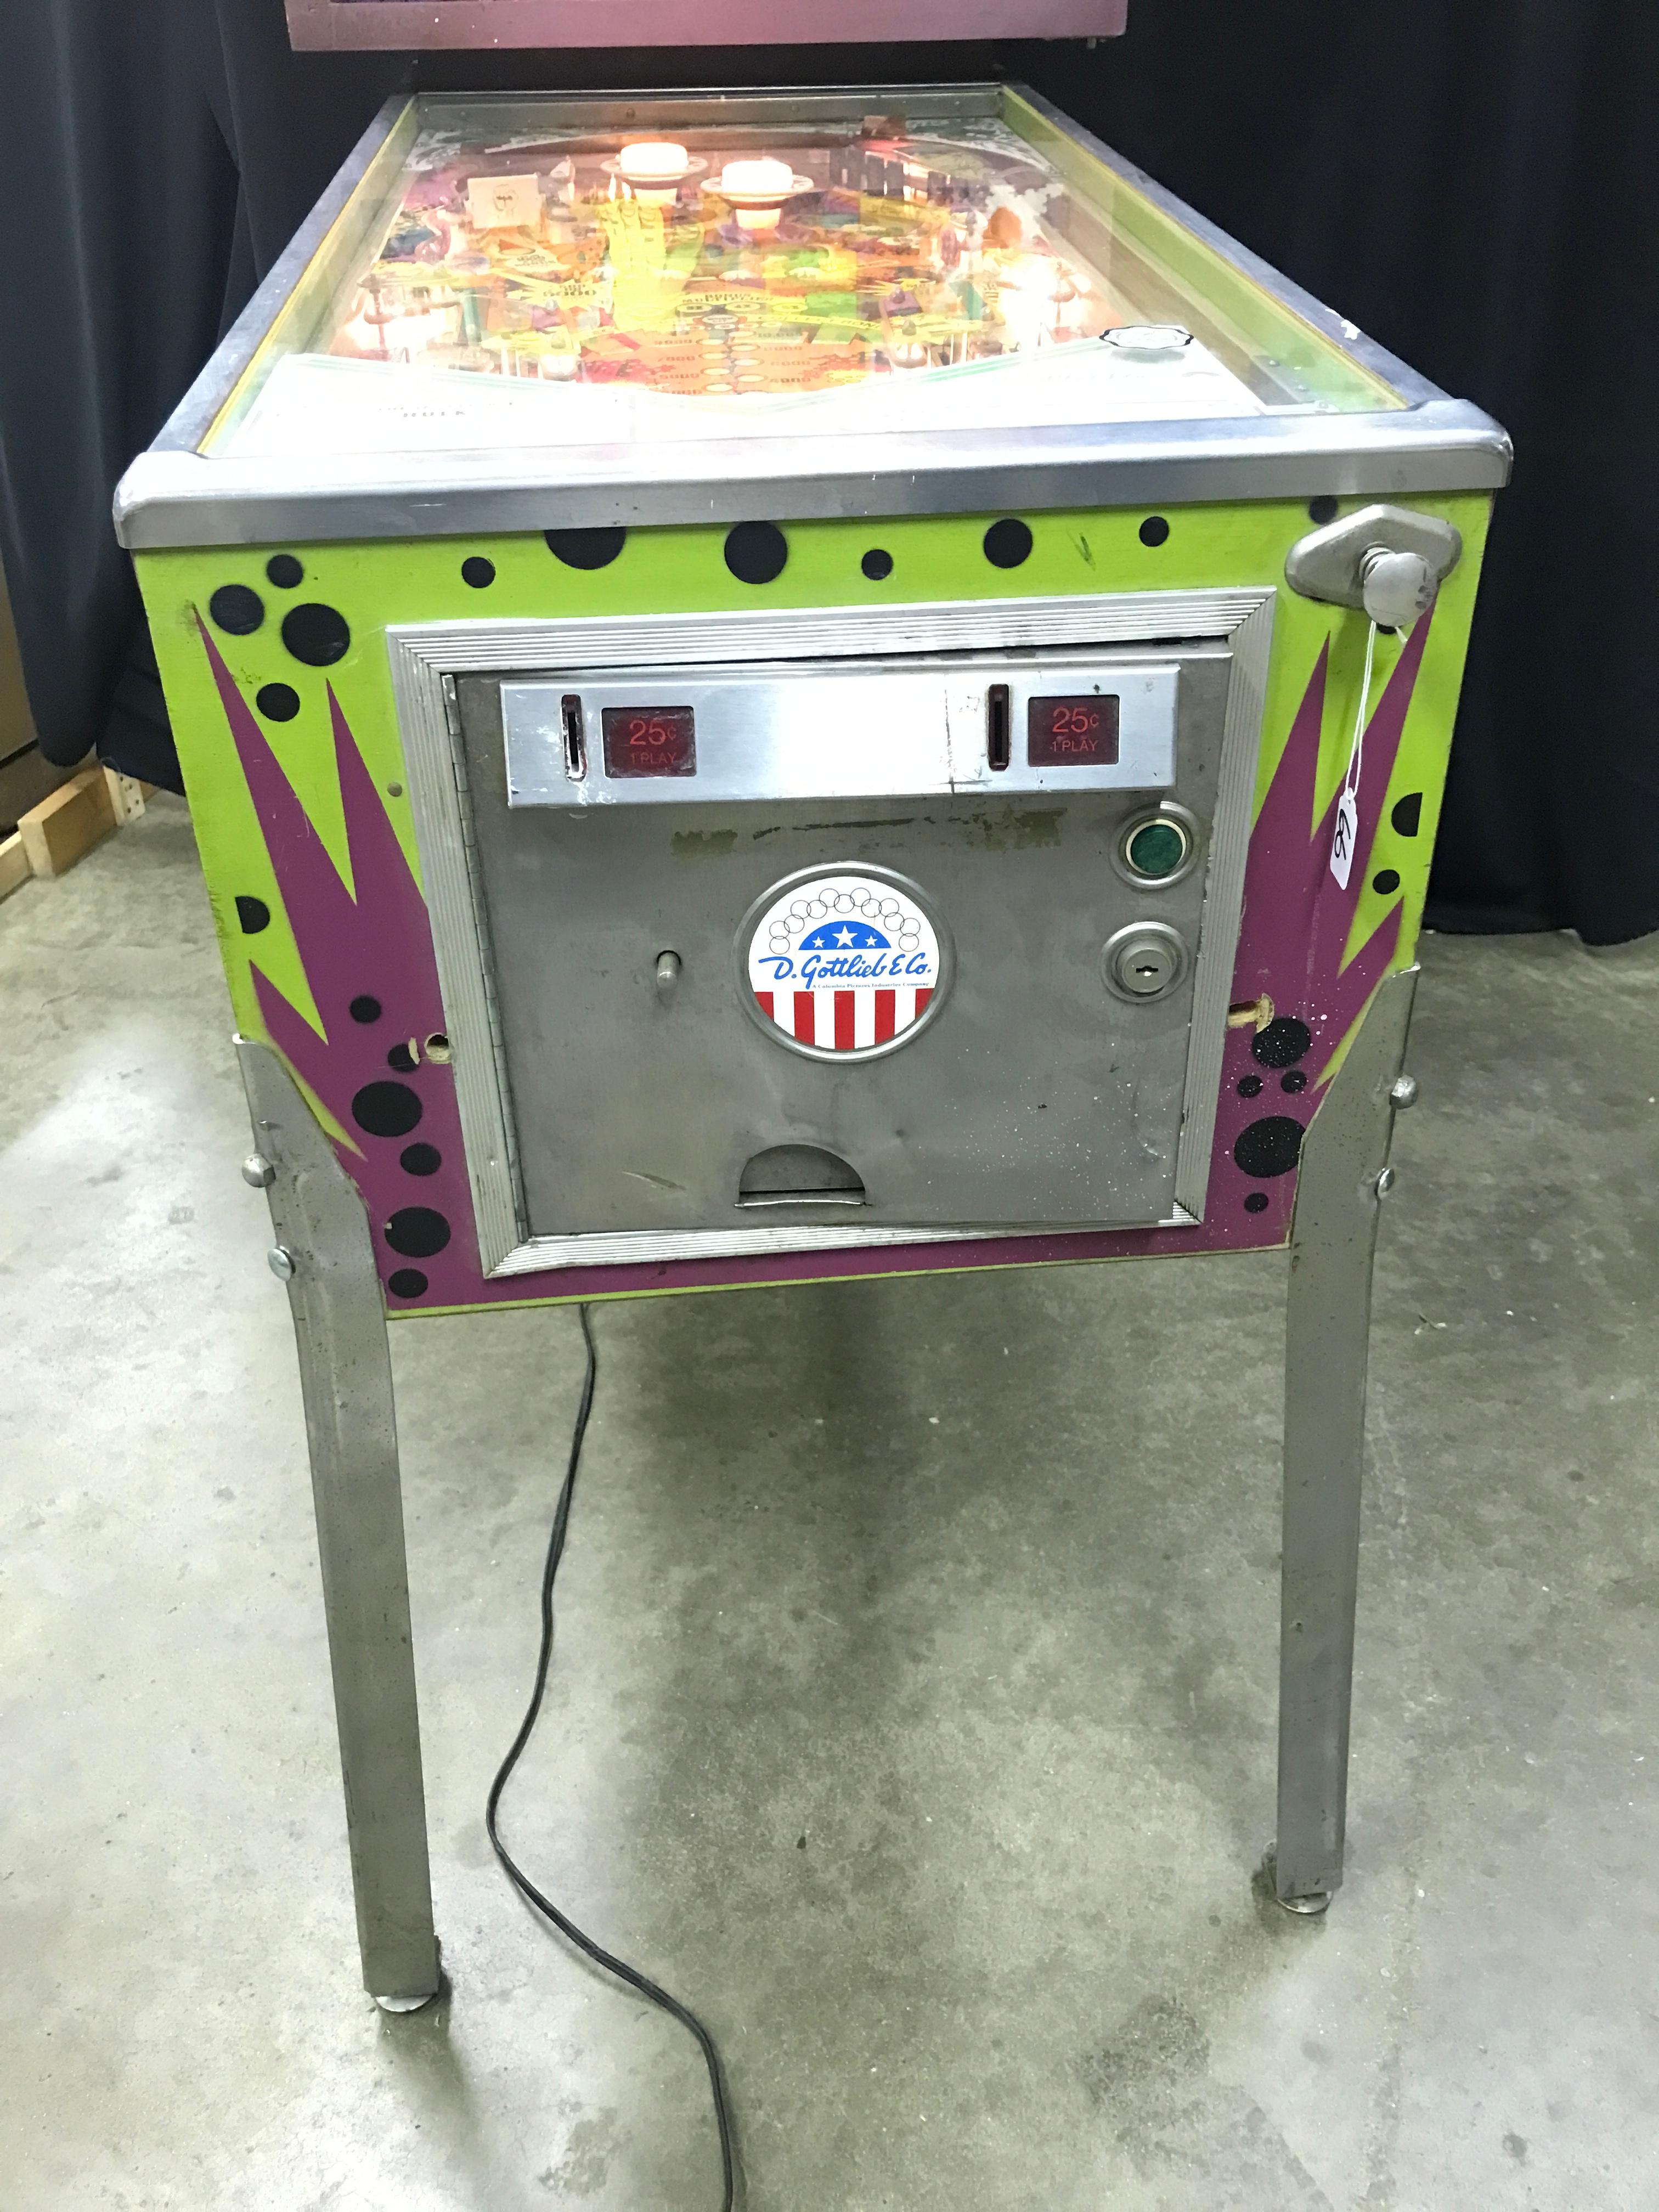 1979 D. Gottlieb & Company Hulk Marvel Pinball Machine